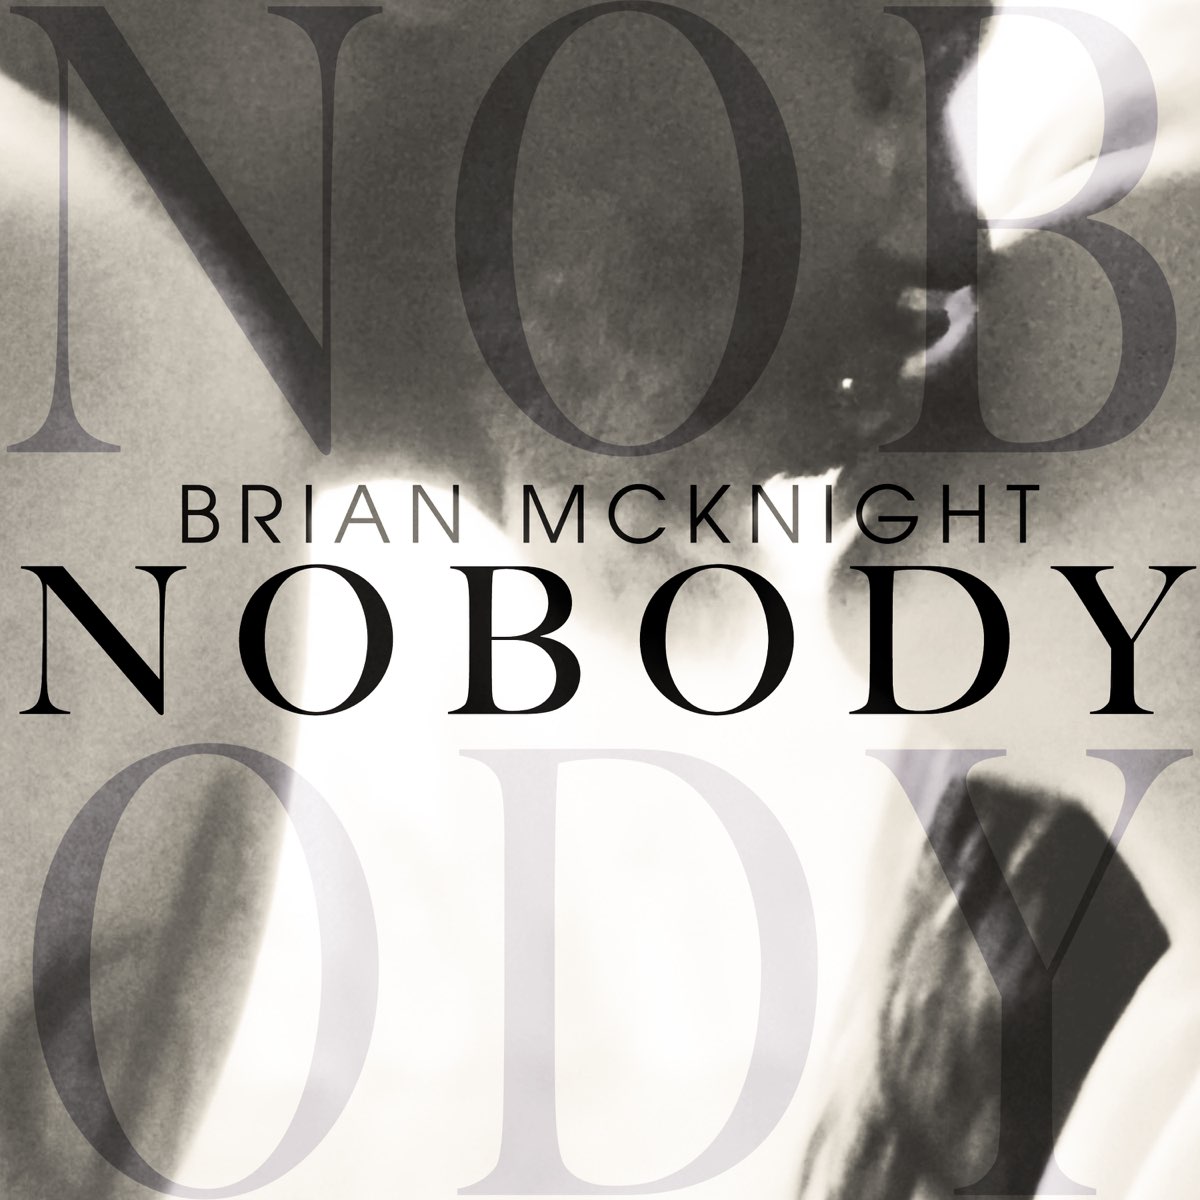 Nobody - Single by Brian McKnight on Apple Music.